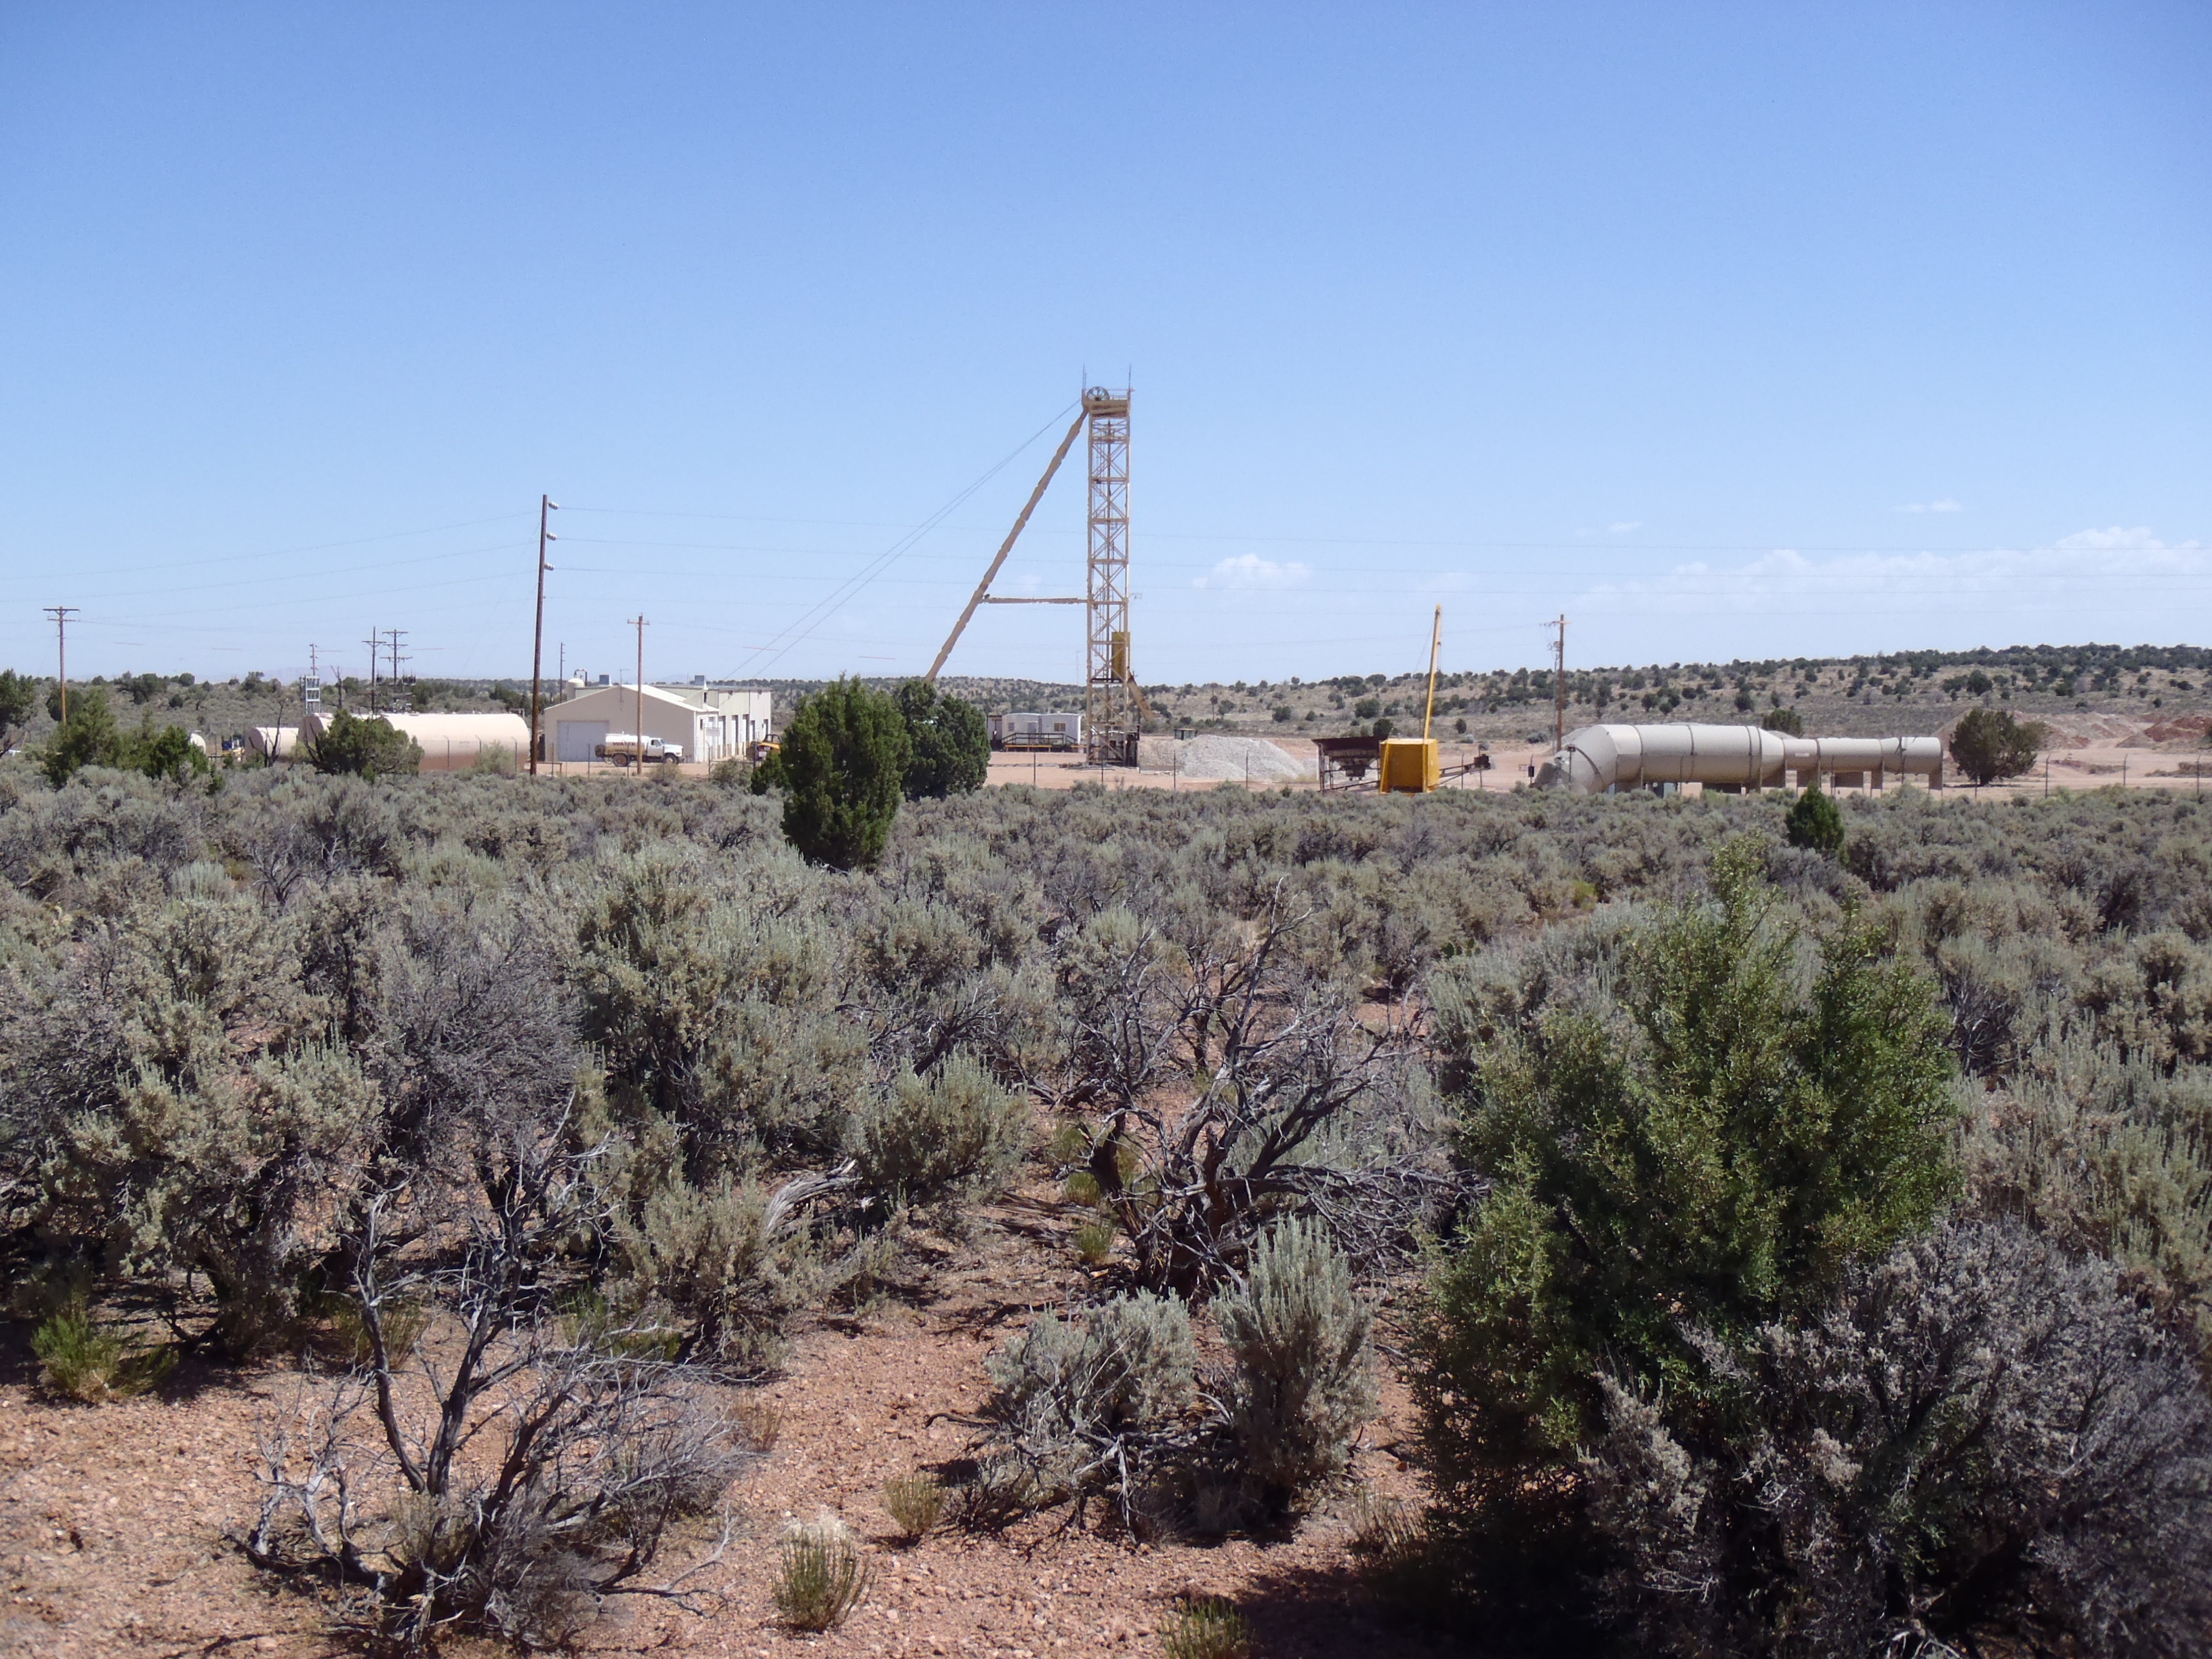 Arizona 1 Mine site equipment and buildings